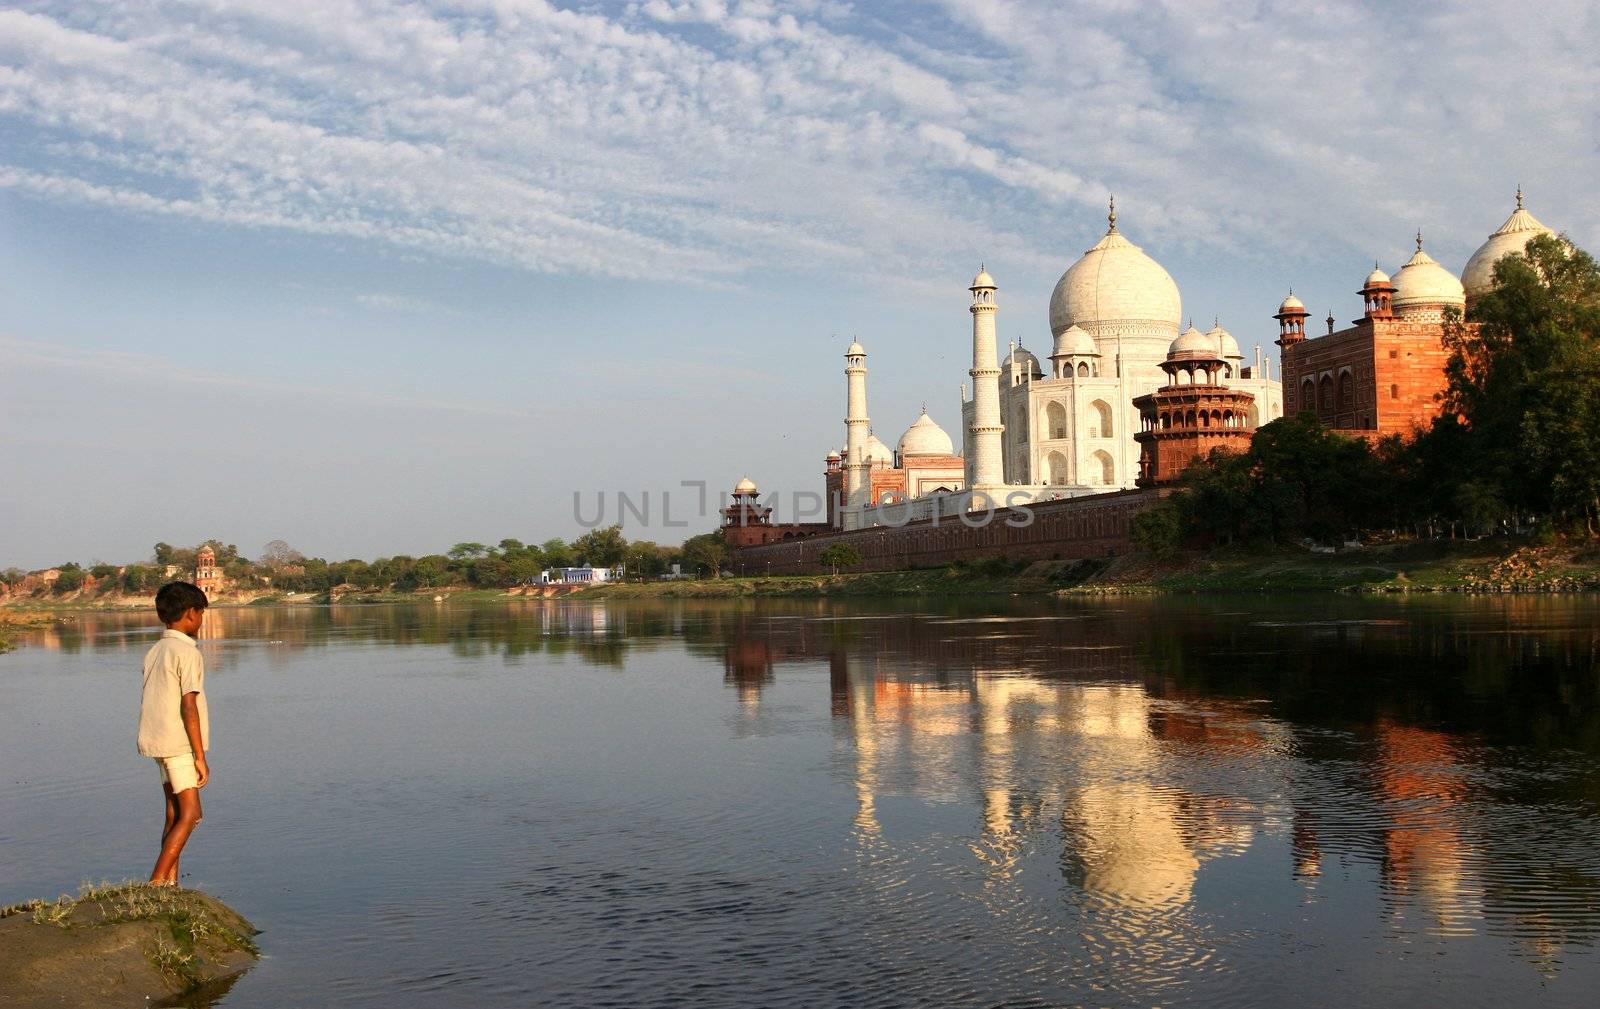 Taj Mahal mirrored in a river